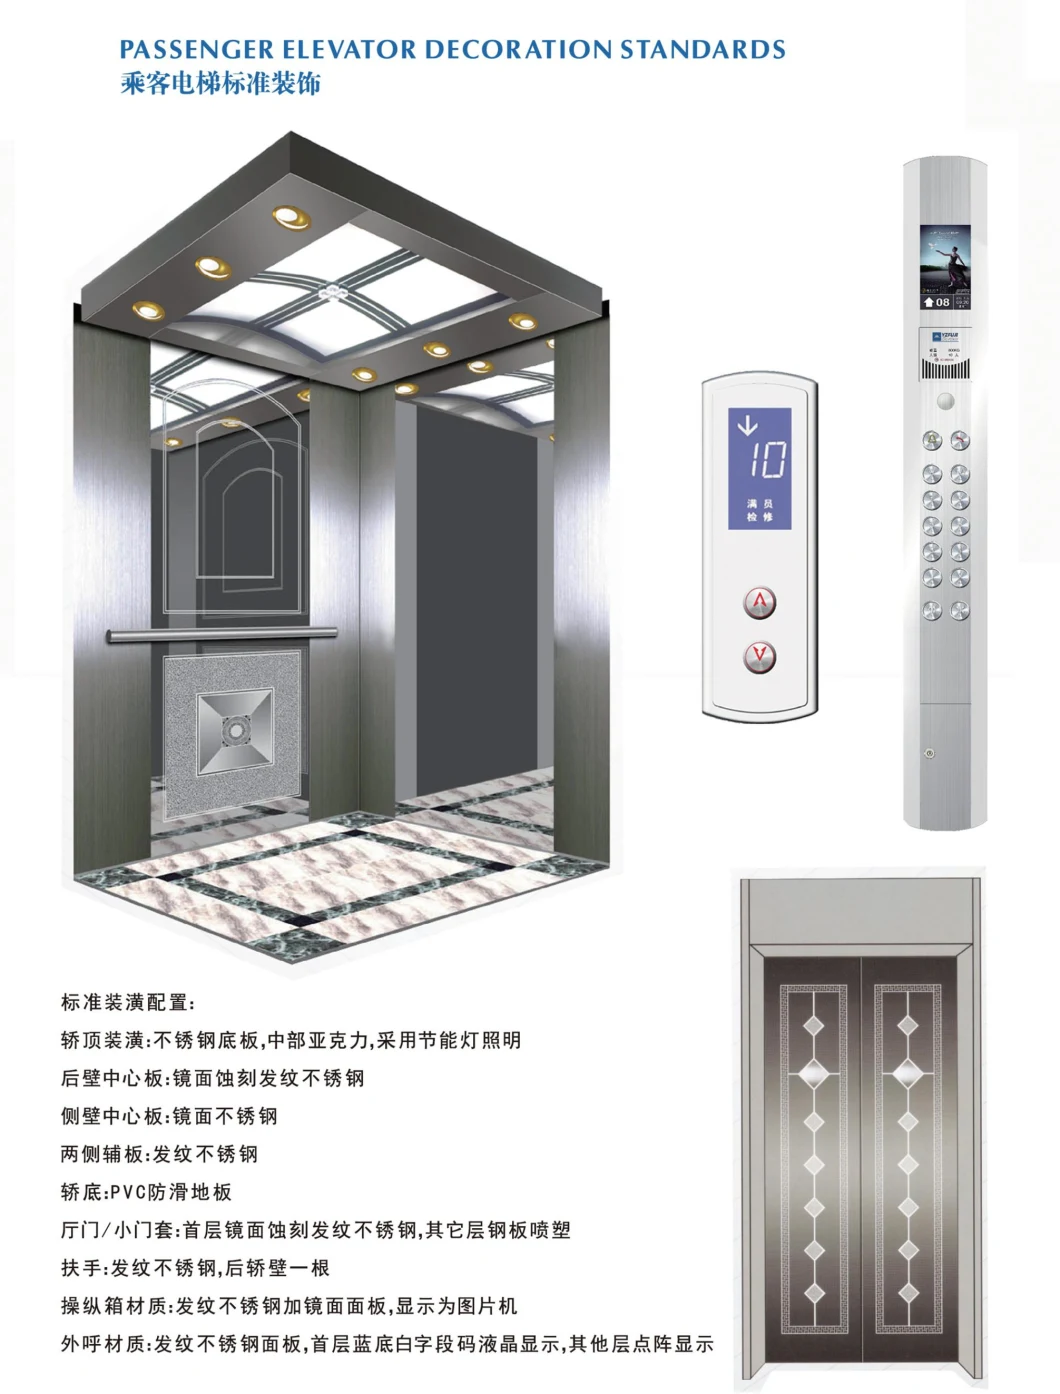 Asia FUJI Panoramic Passenger Lift and Post Lift Elevator